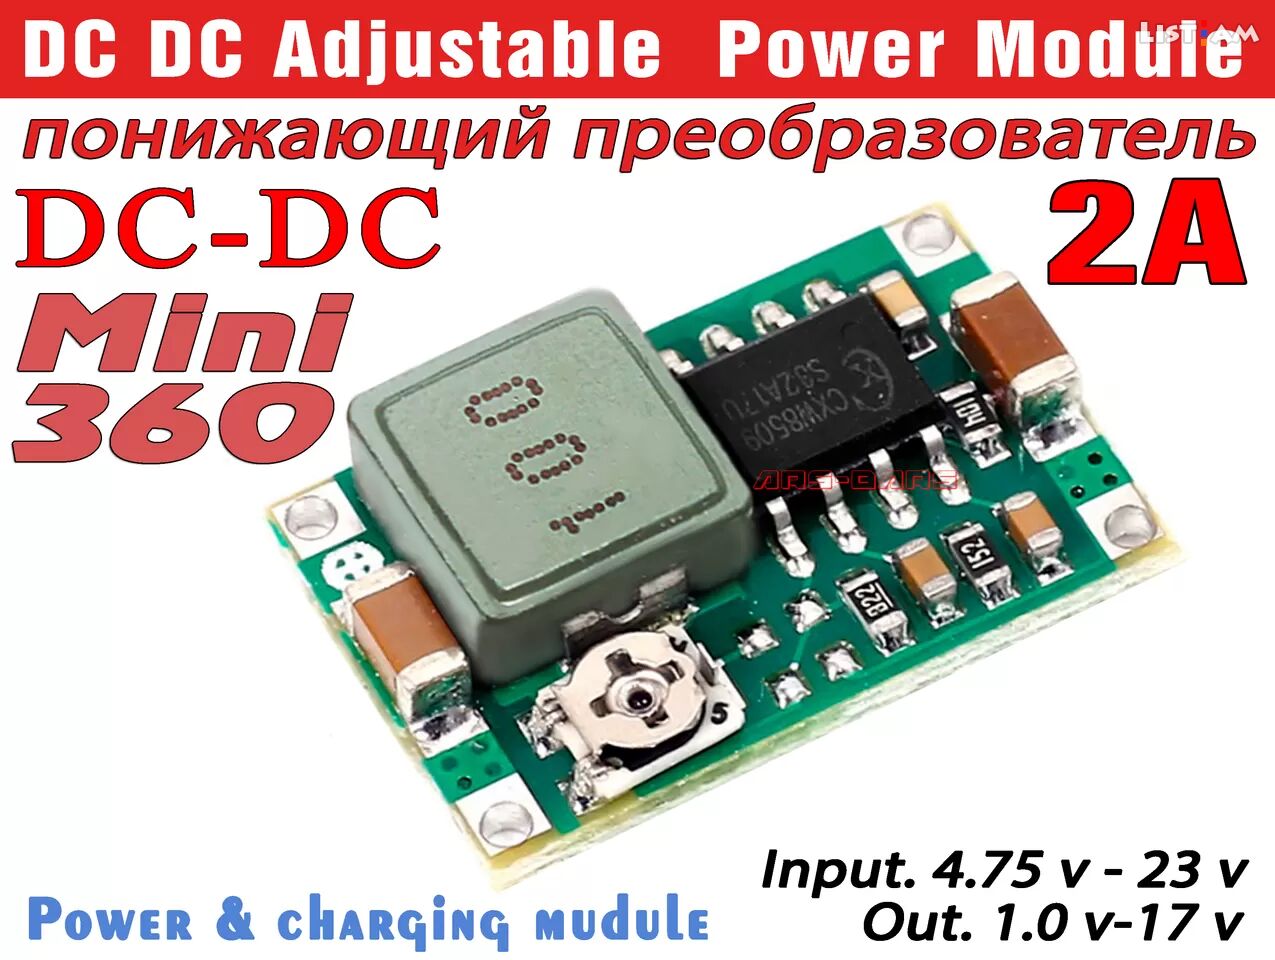 Mini360 DC-DC